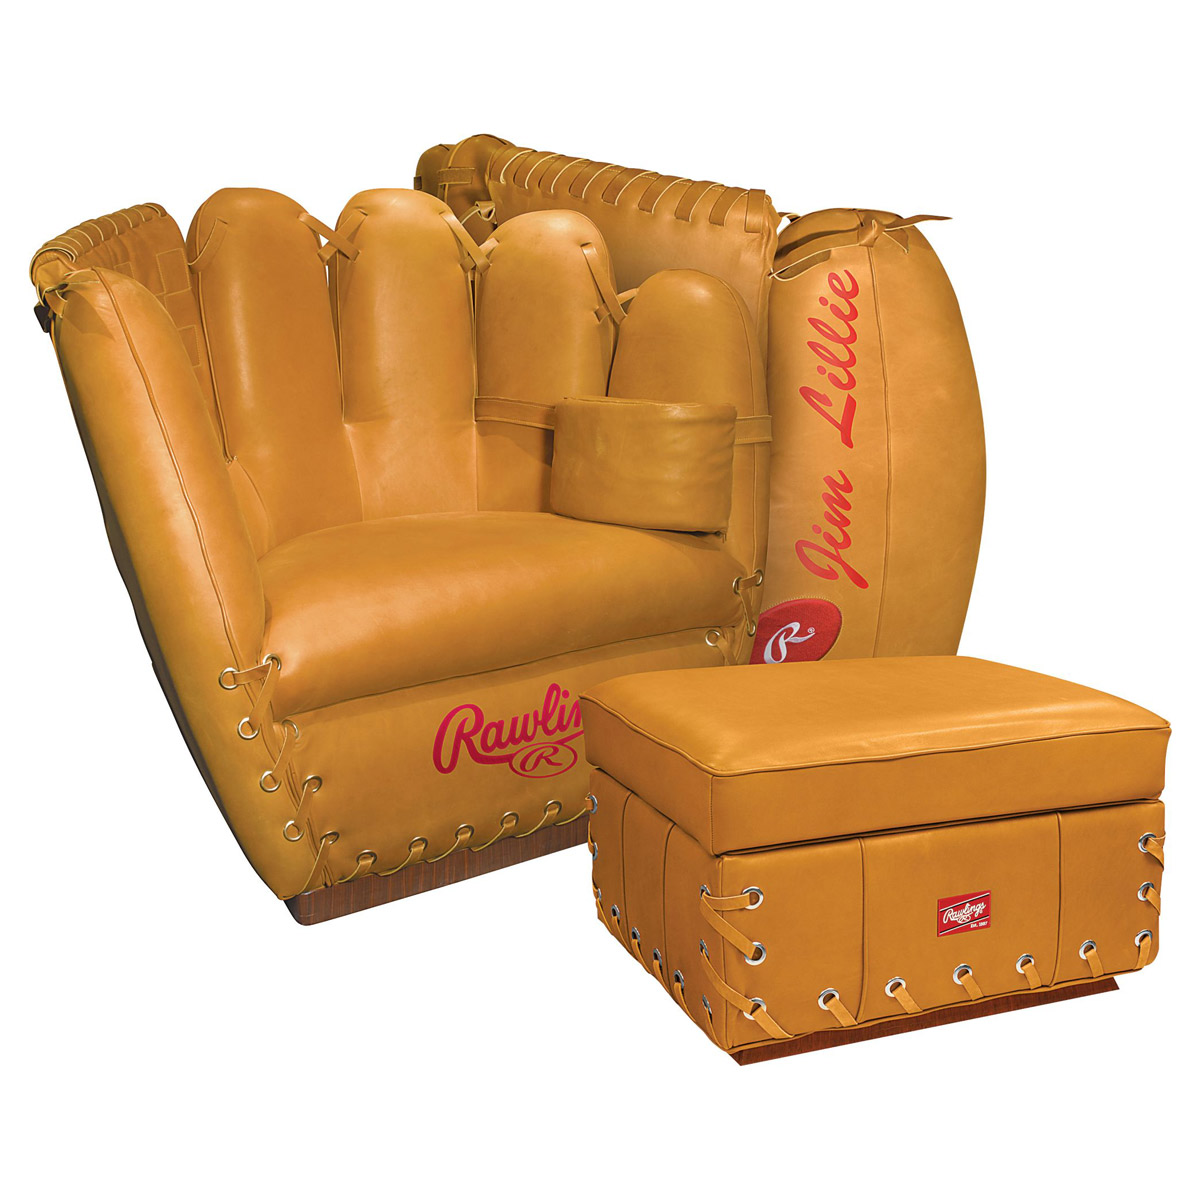 Rawlings Leather Baseball Glove Chair The Green Head